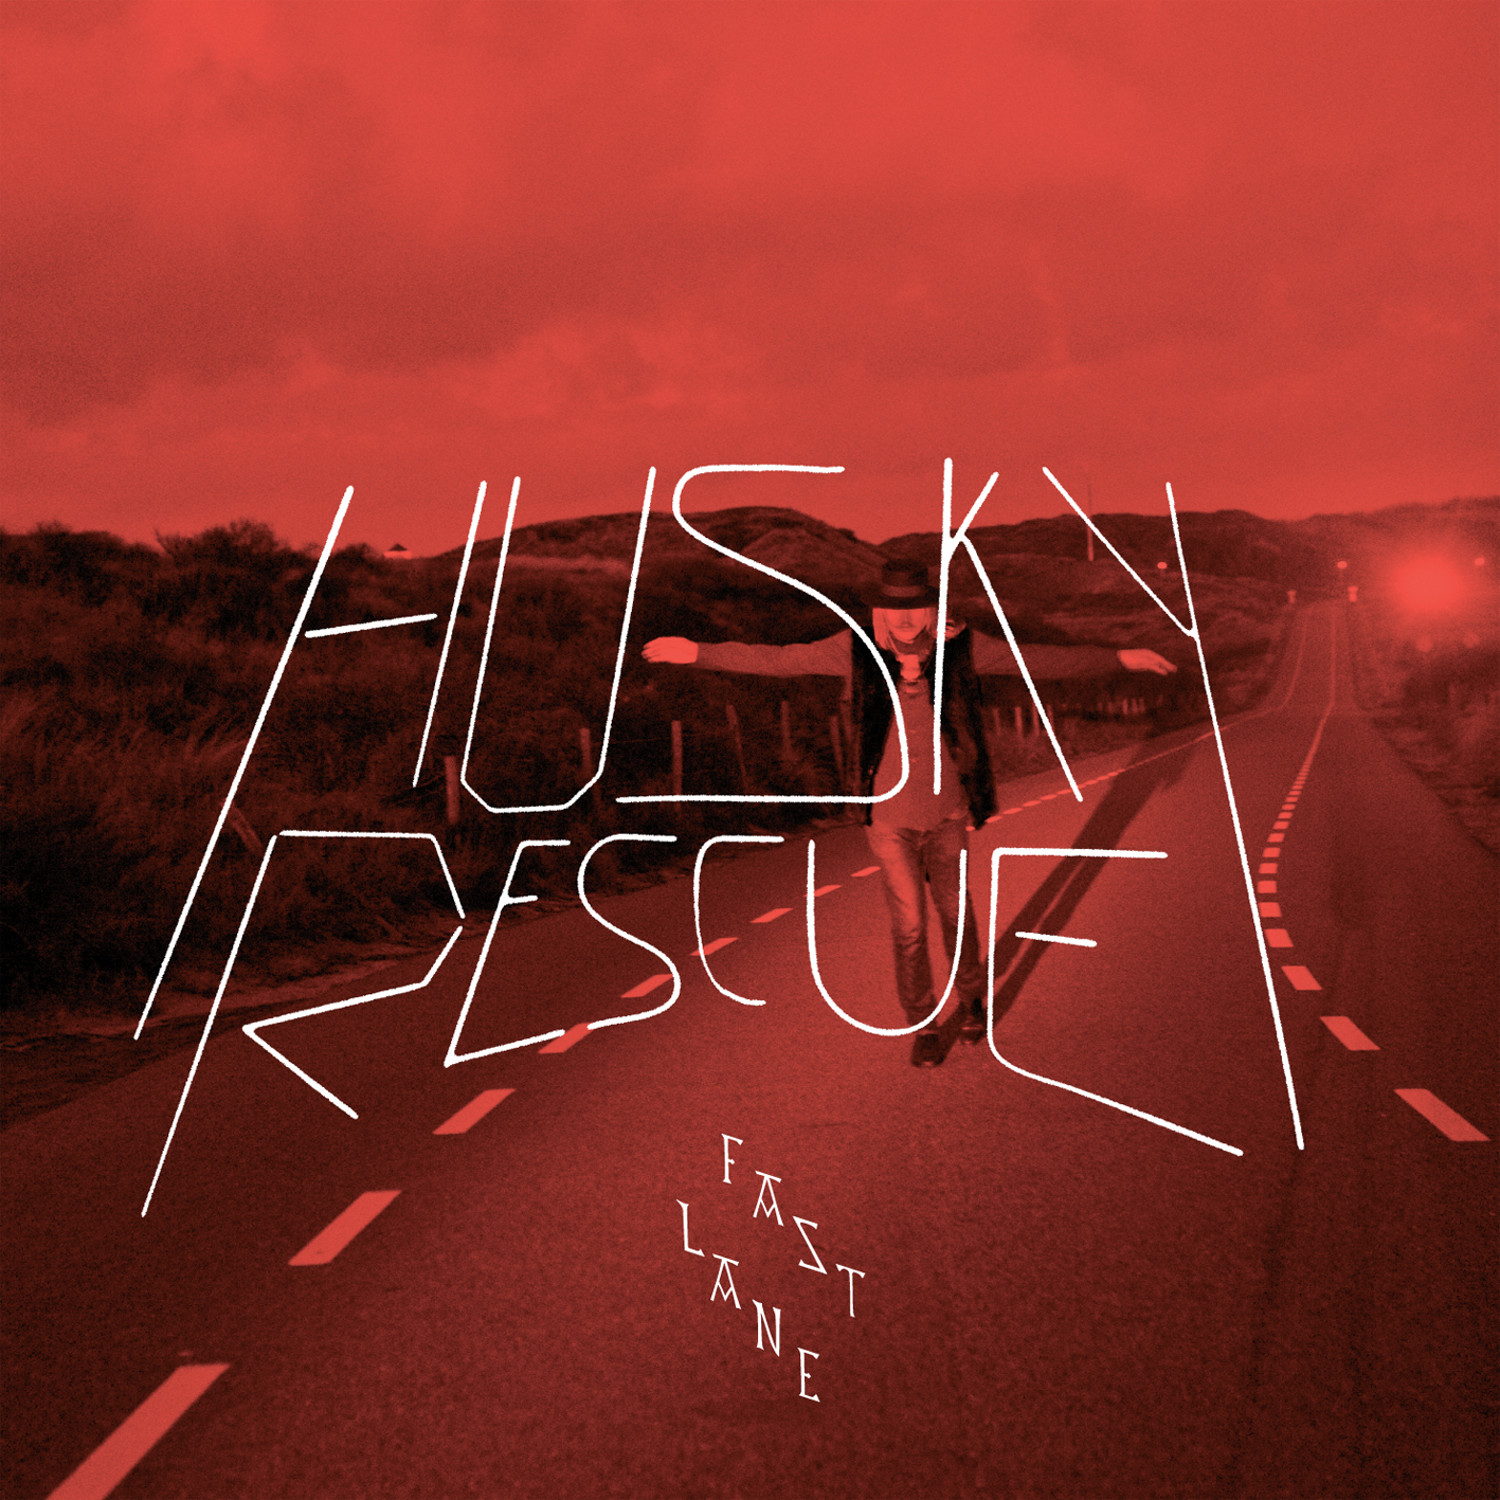 Husky Rescue альбом. Husky Rescue - ship of Light. Fast Lane. YCK - fast Lane. Fast lane 2